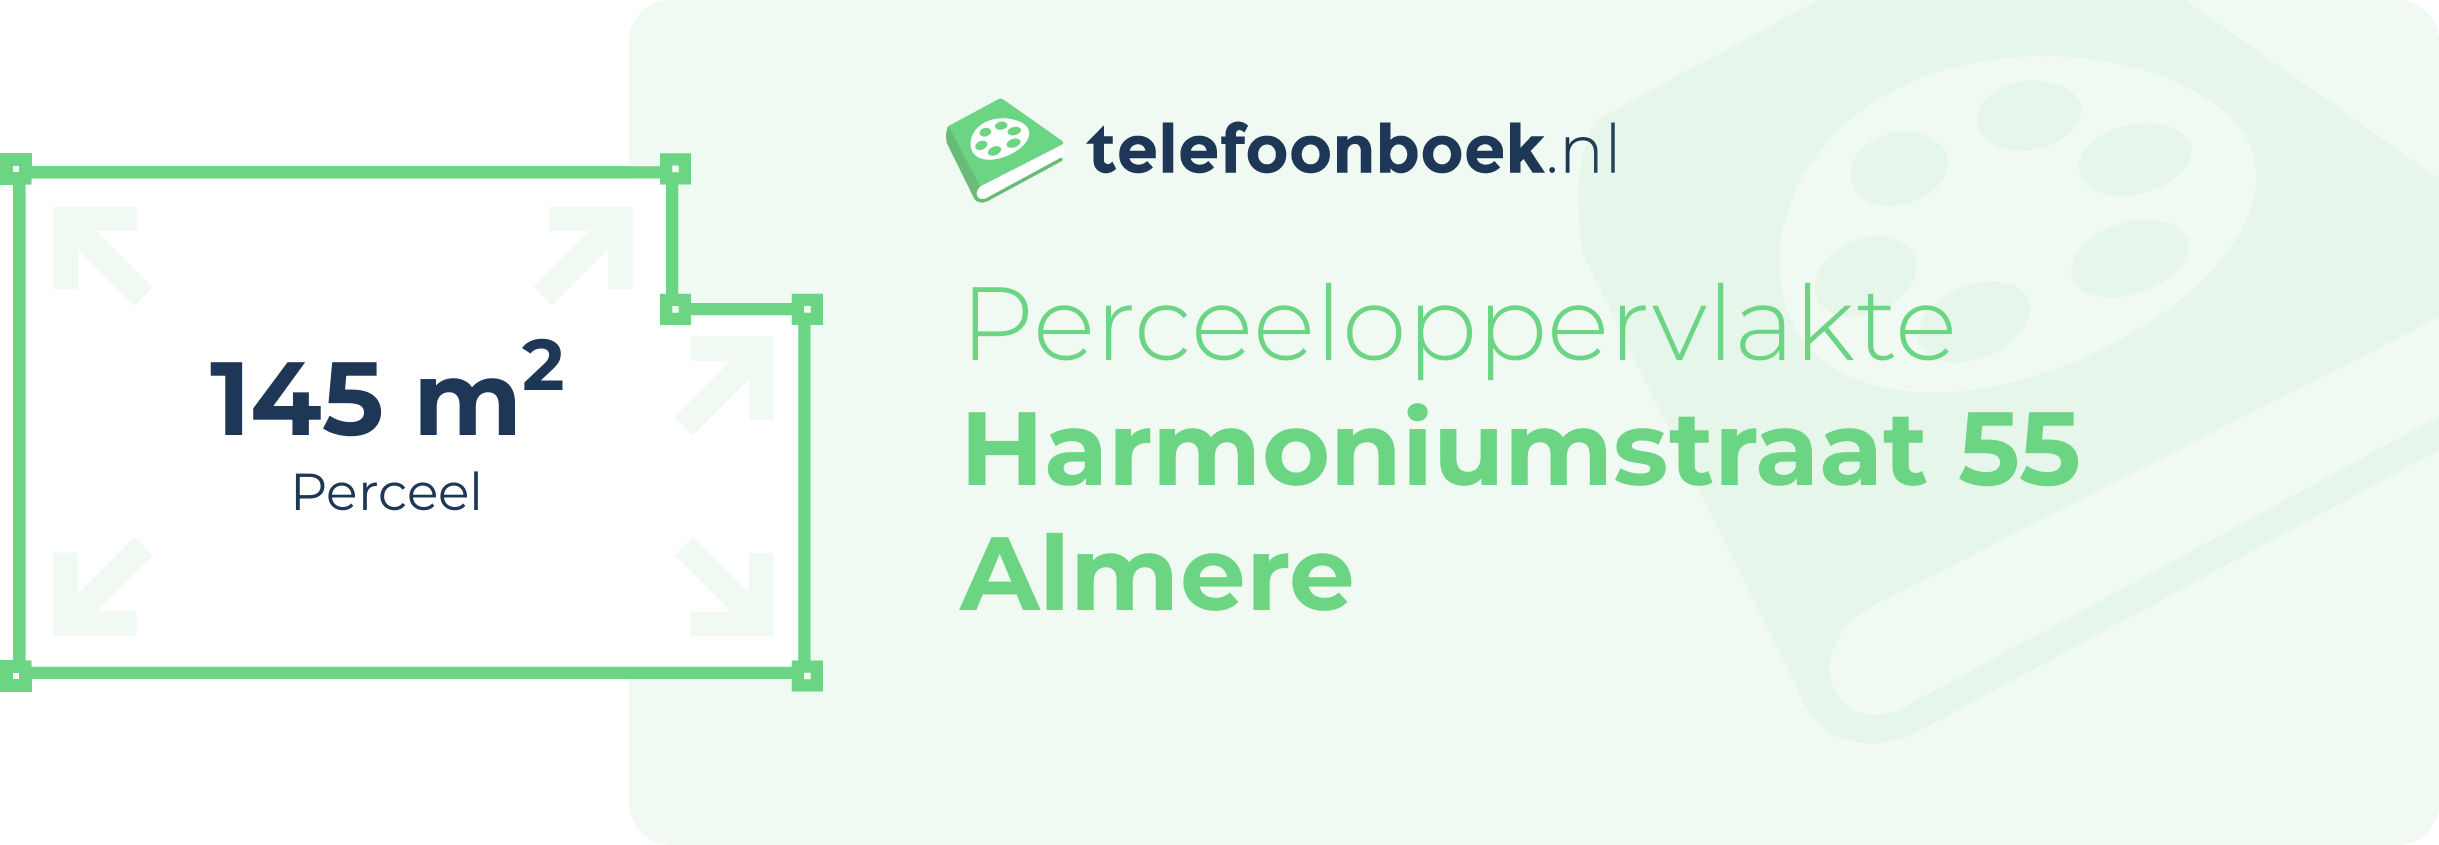 Perceeloppervlakte Harmoniumstraat 55 Almere